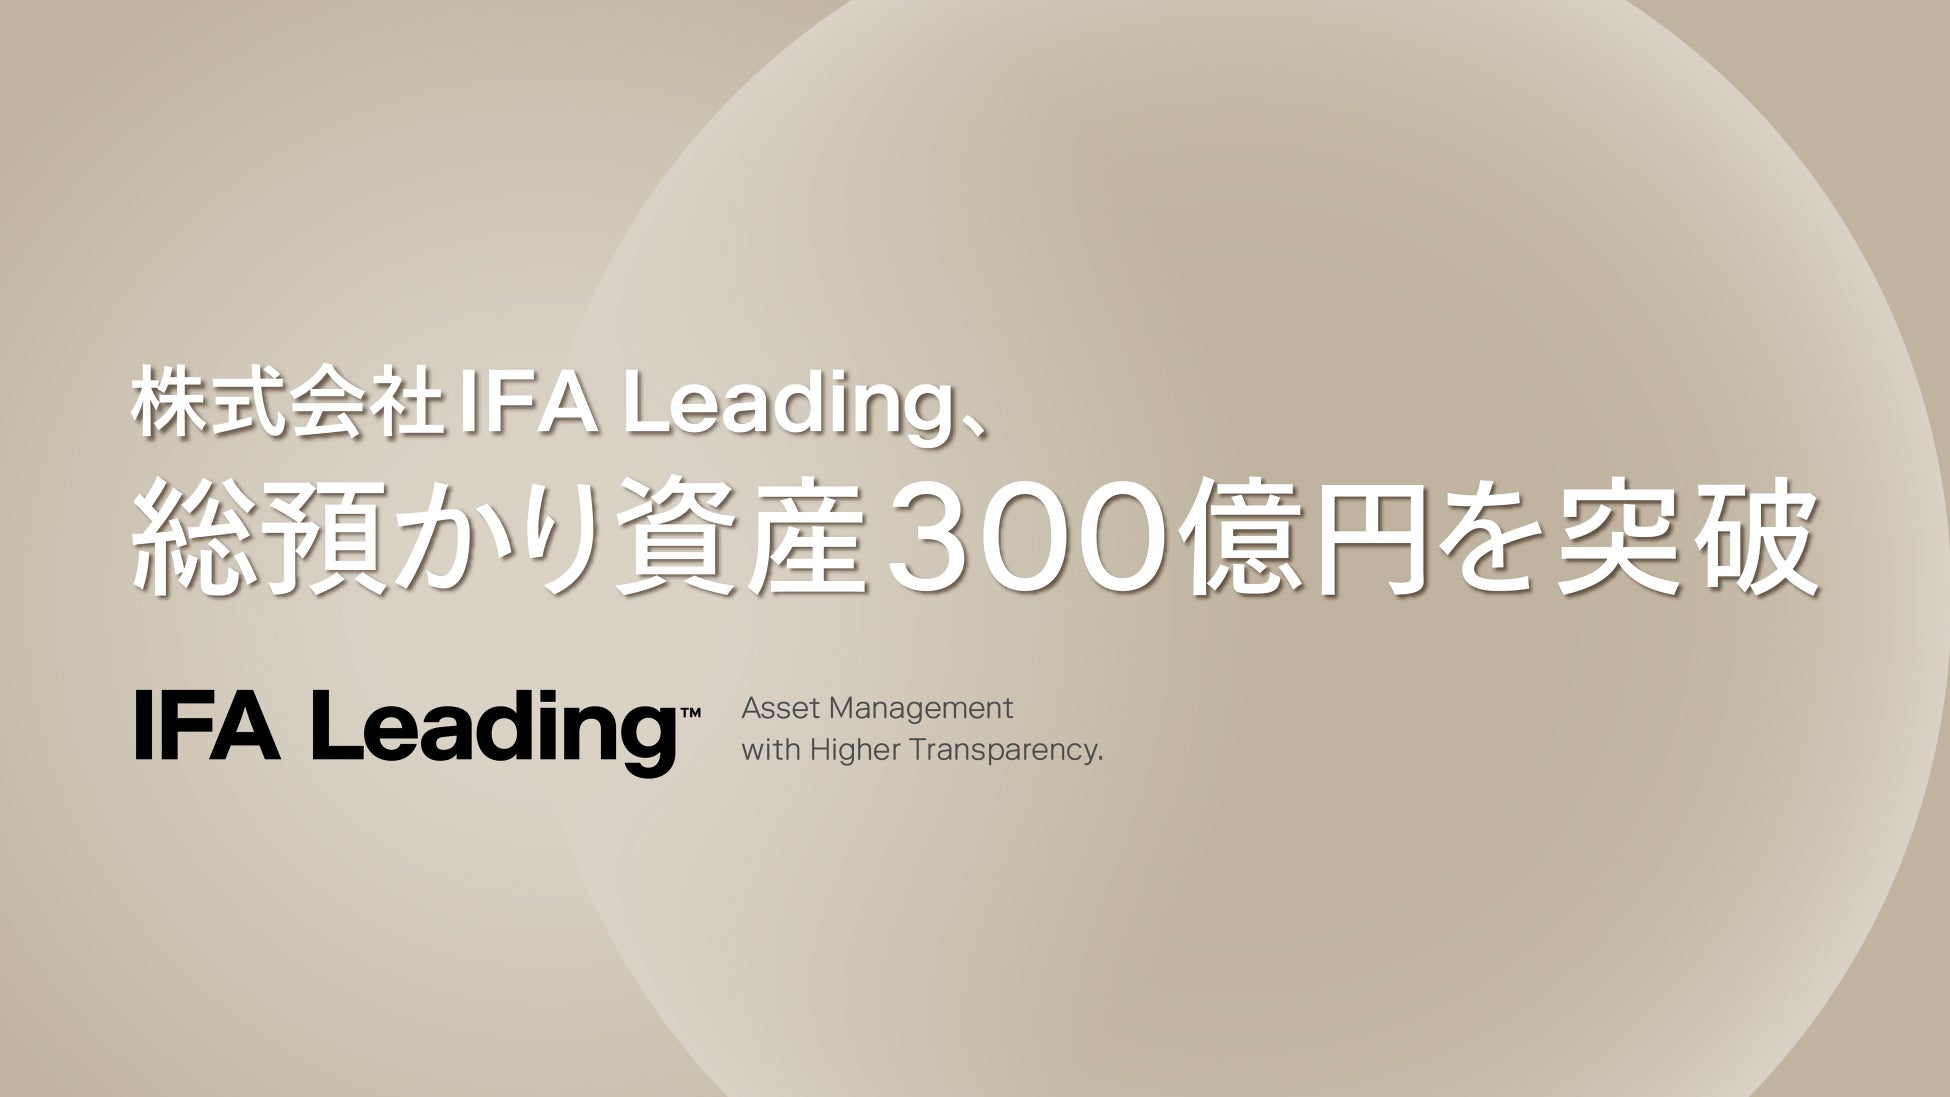 IFA Leading、当社が仲介する総預かり資産が300億円を突破